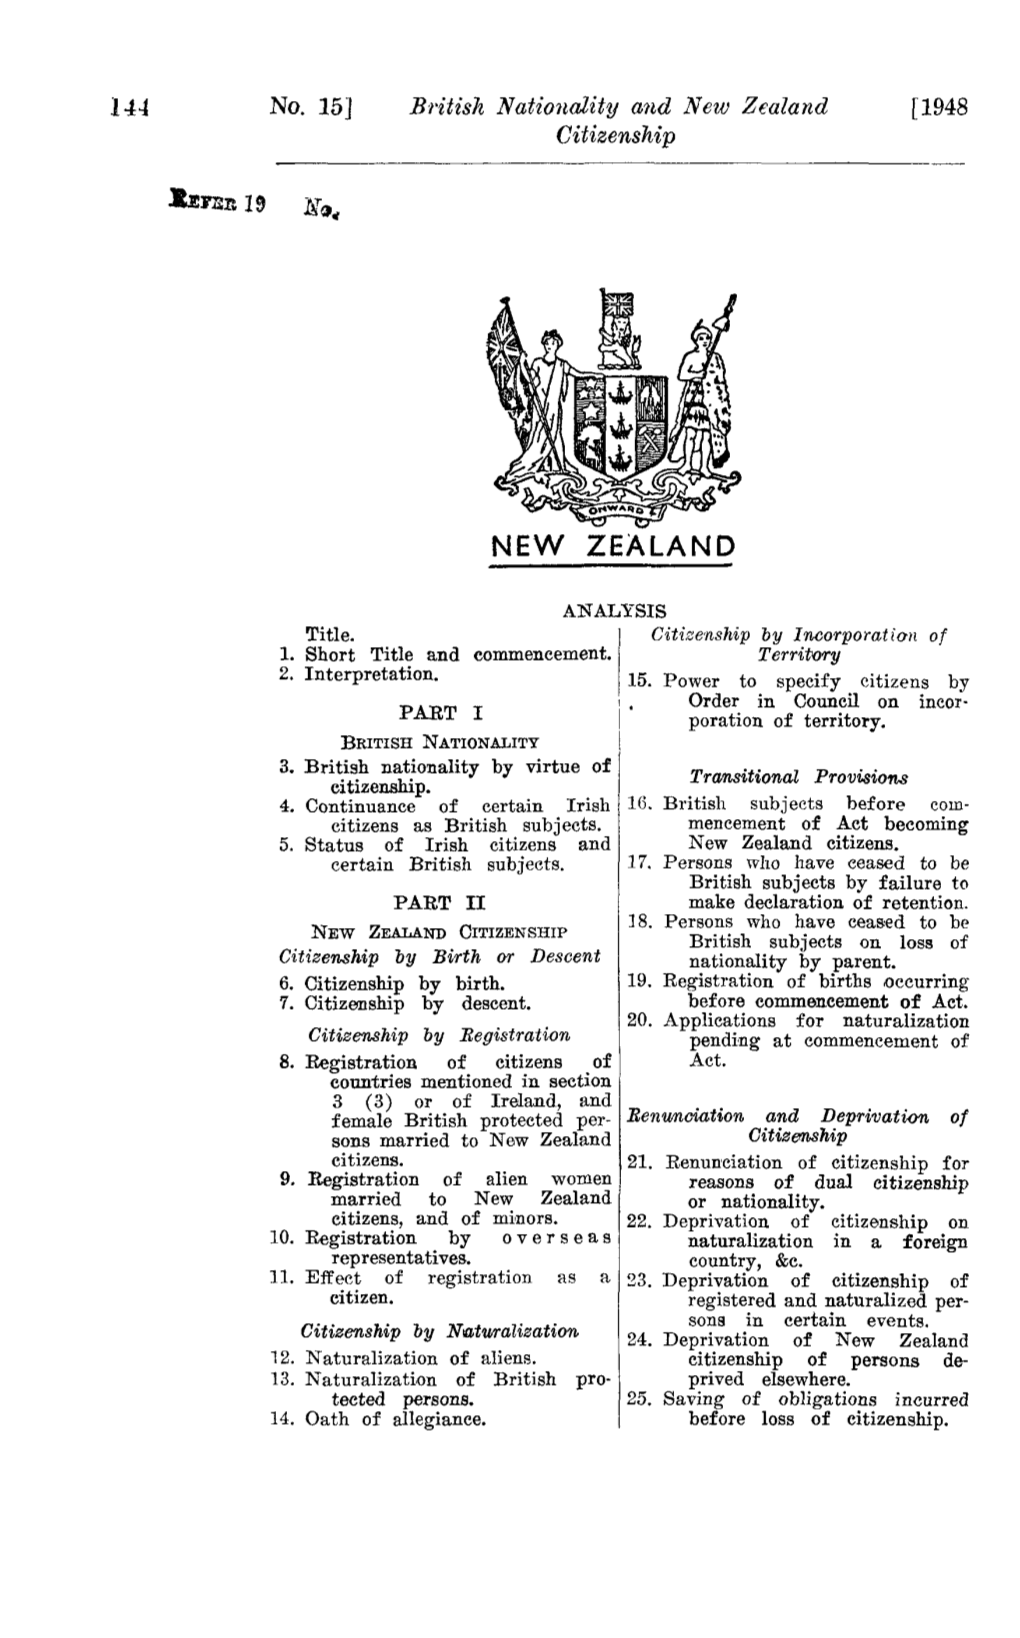 British Nationality and New Zealand Citizenship Act 1948